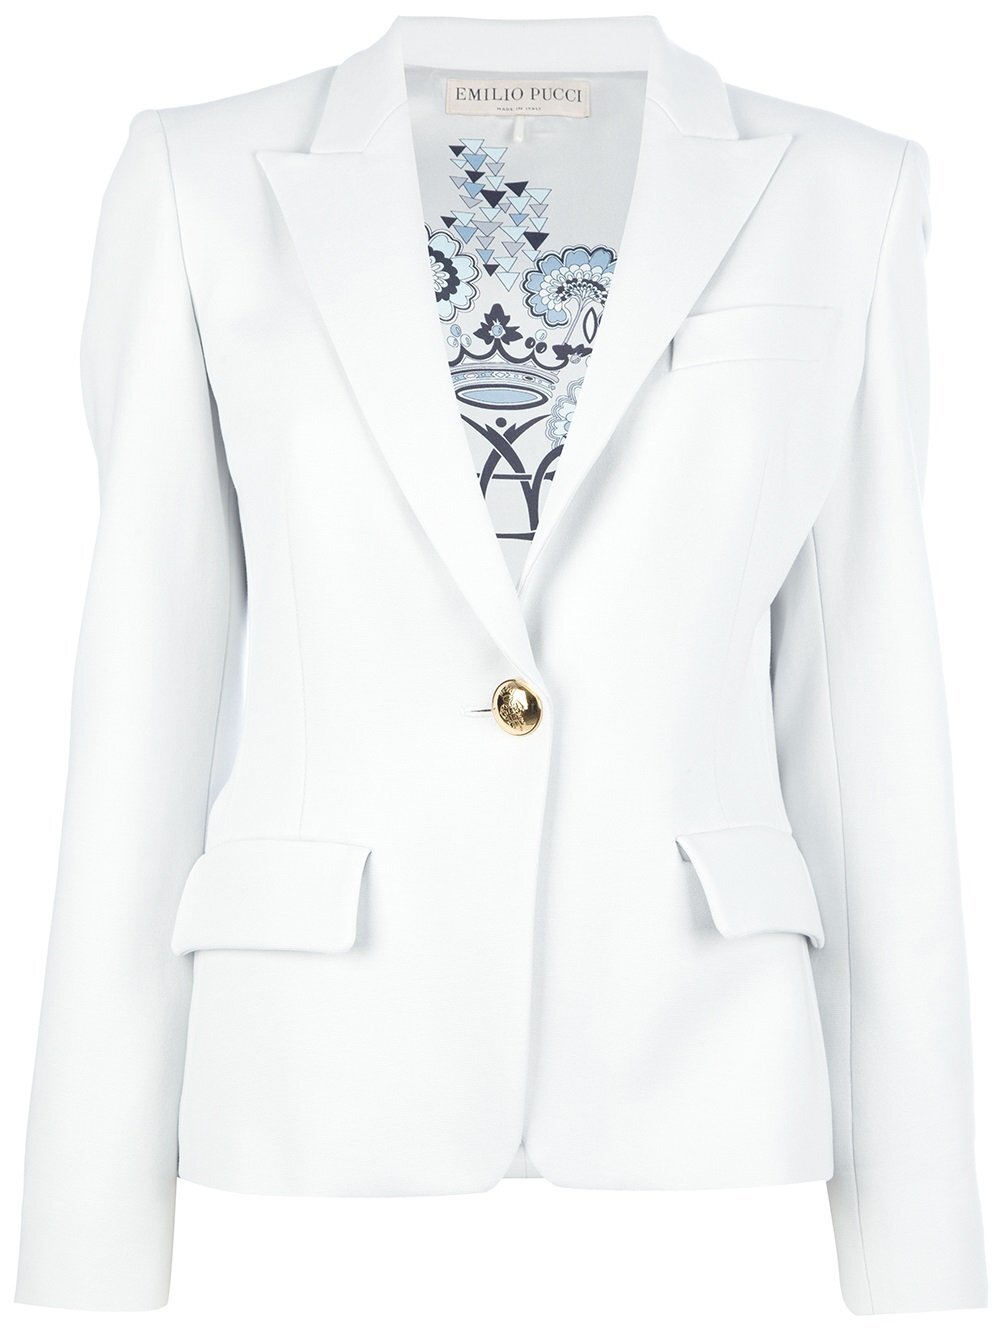 emilio-pucci-white-buttoned-blazer-product-1-12107175-934216968.jpeg